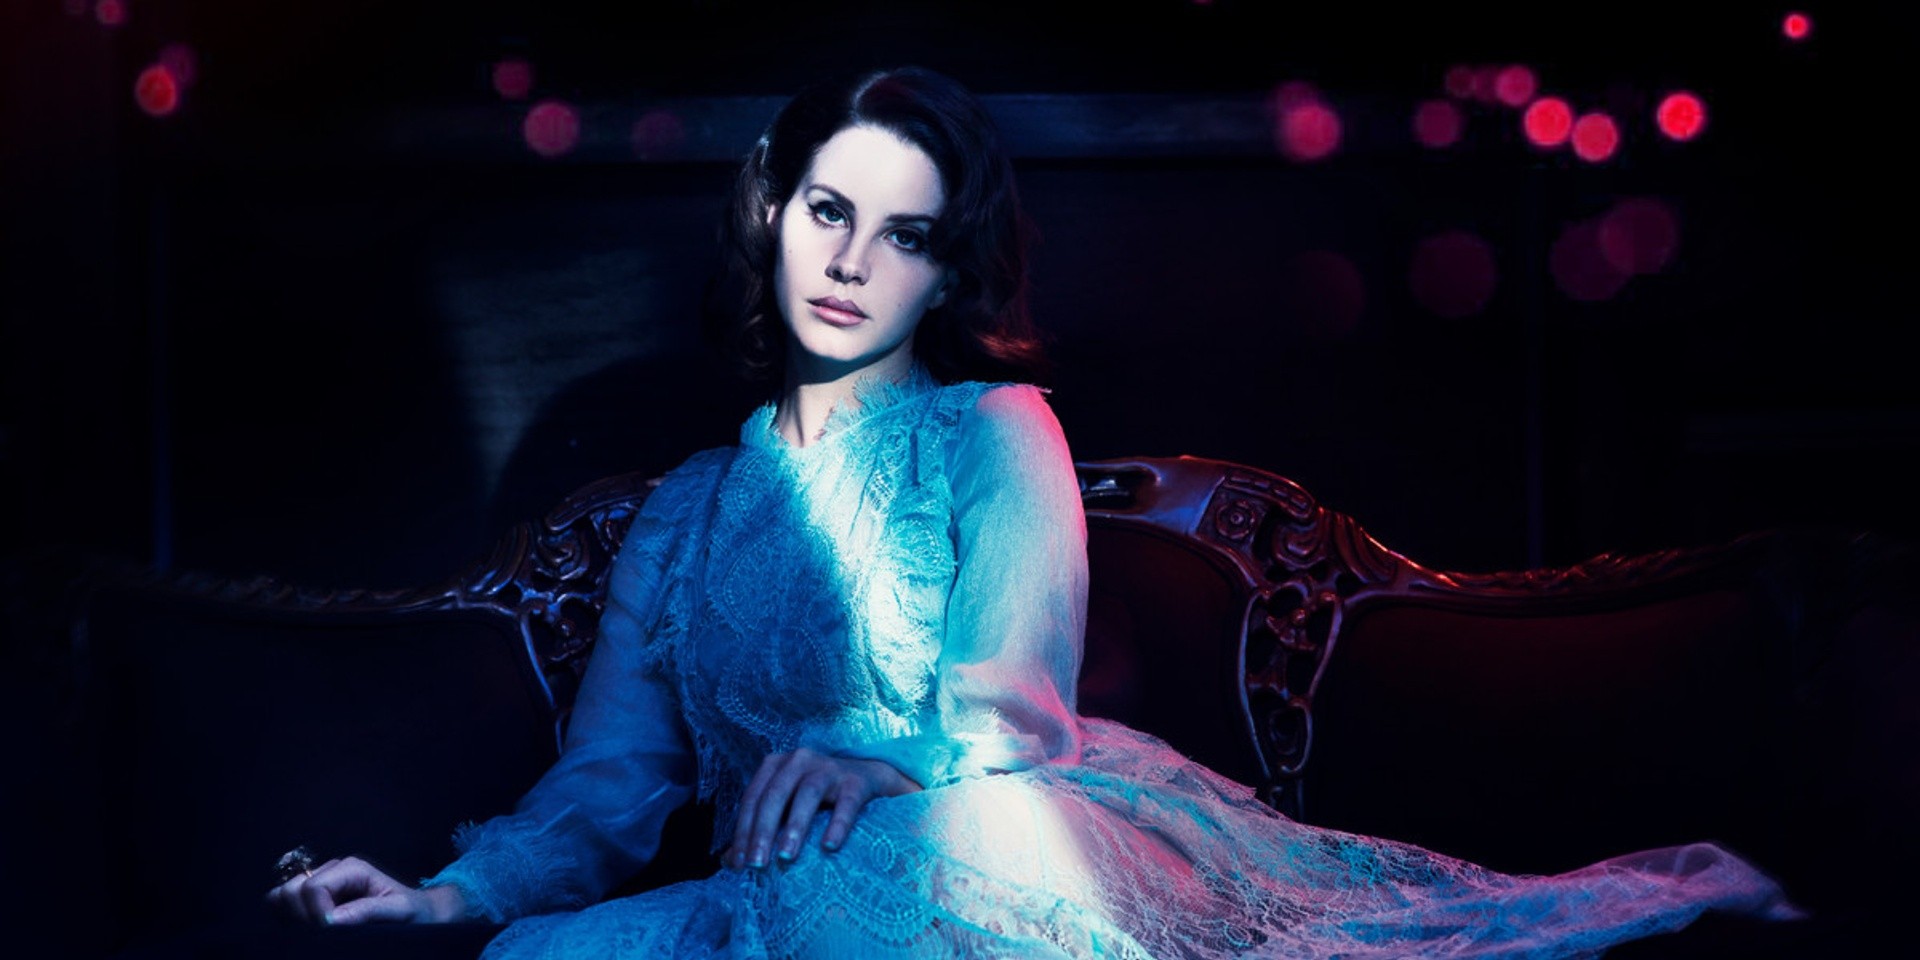 Lana Del Rey shares album art, tracklist and release date of upcoming album